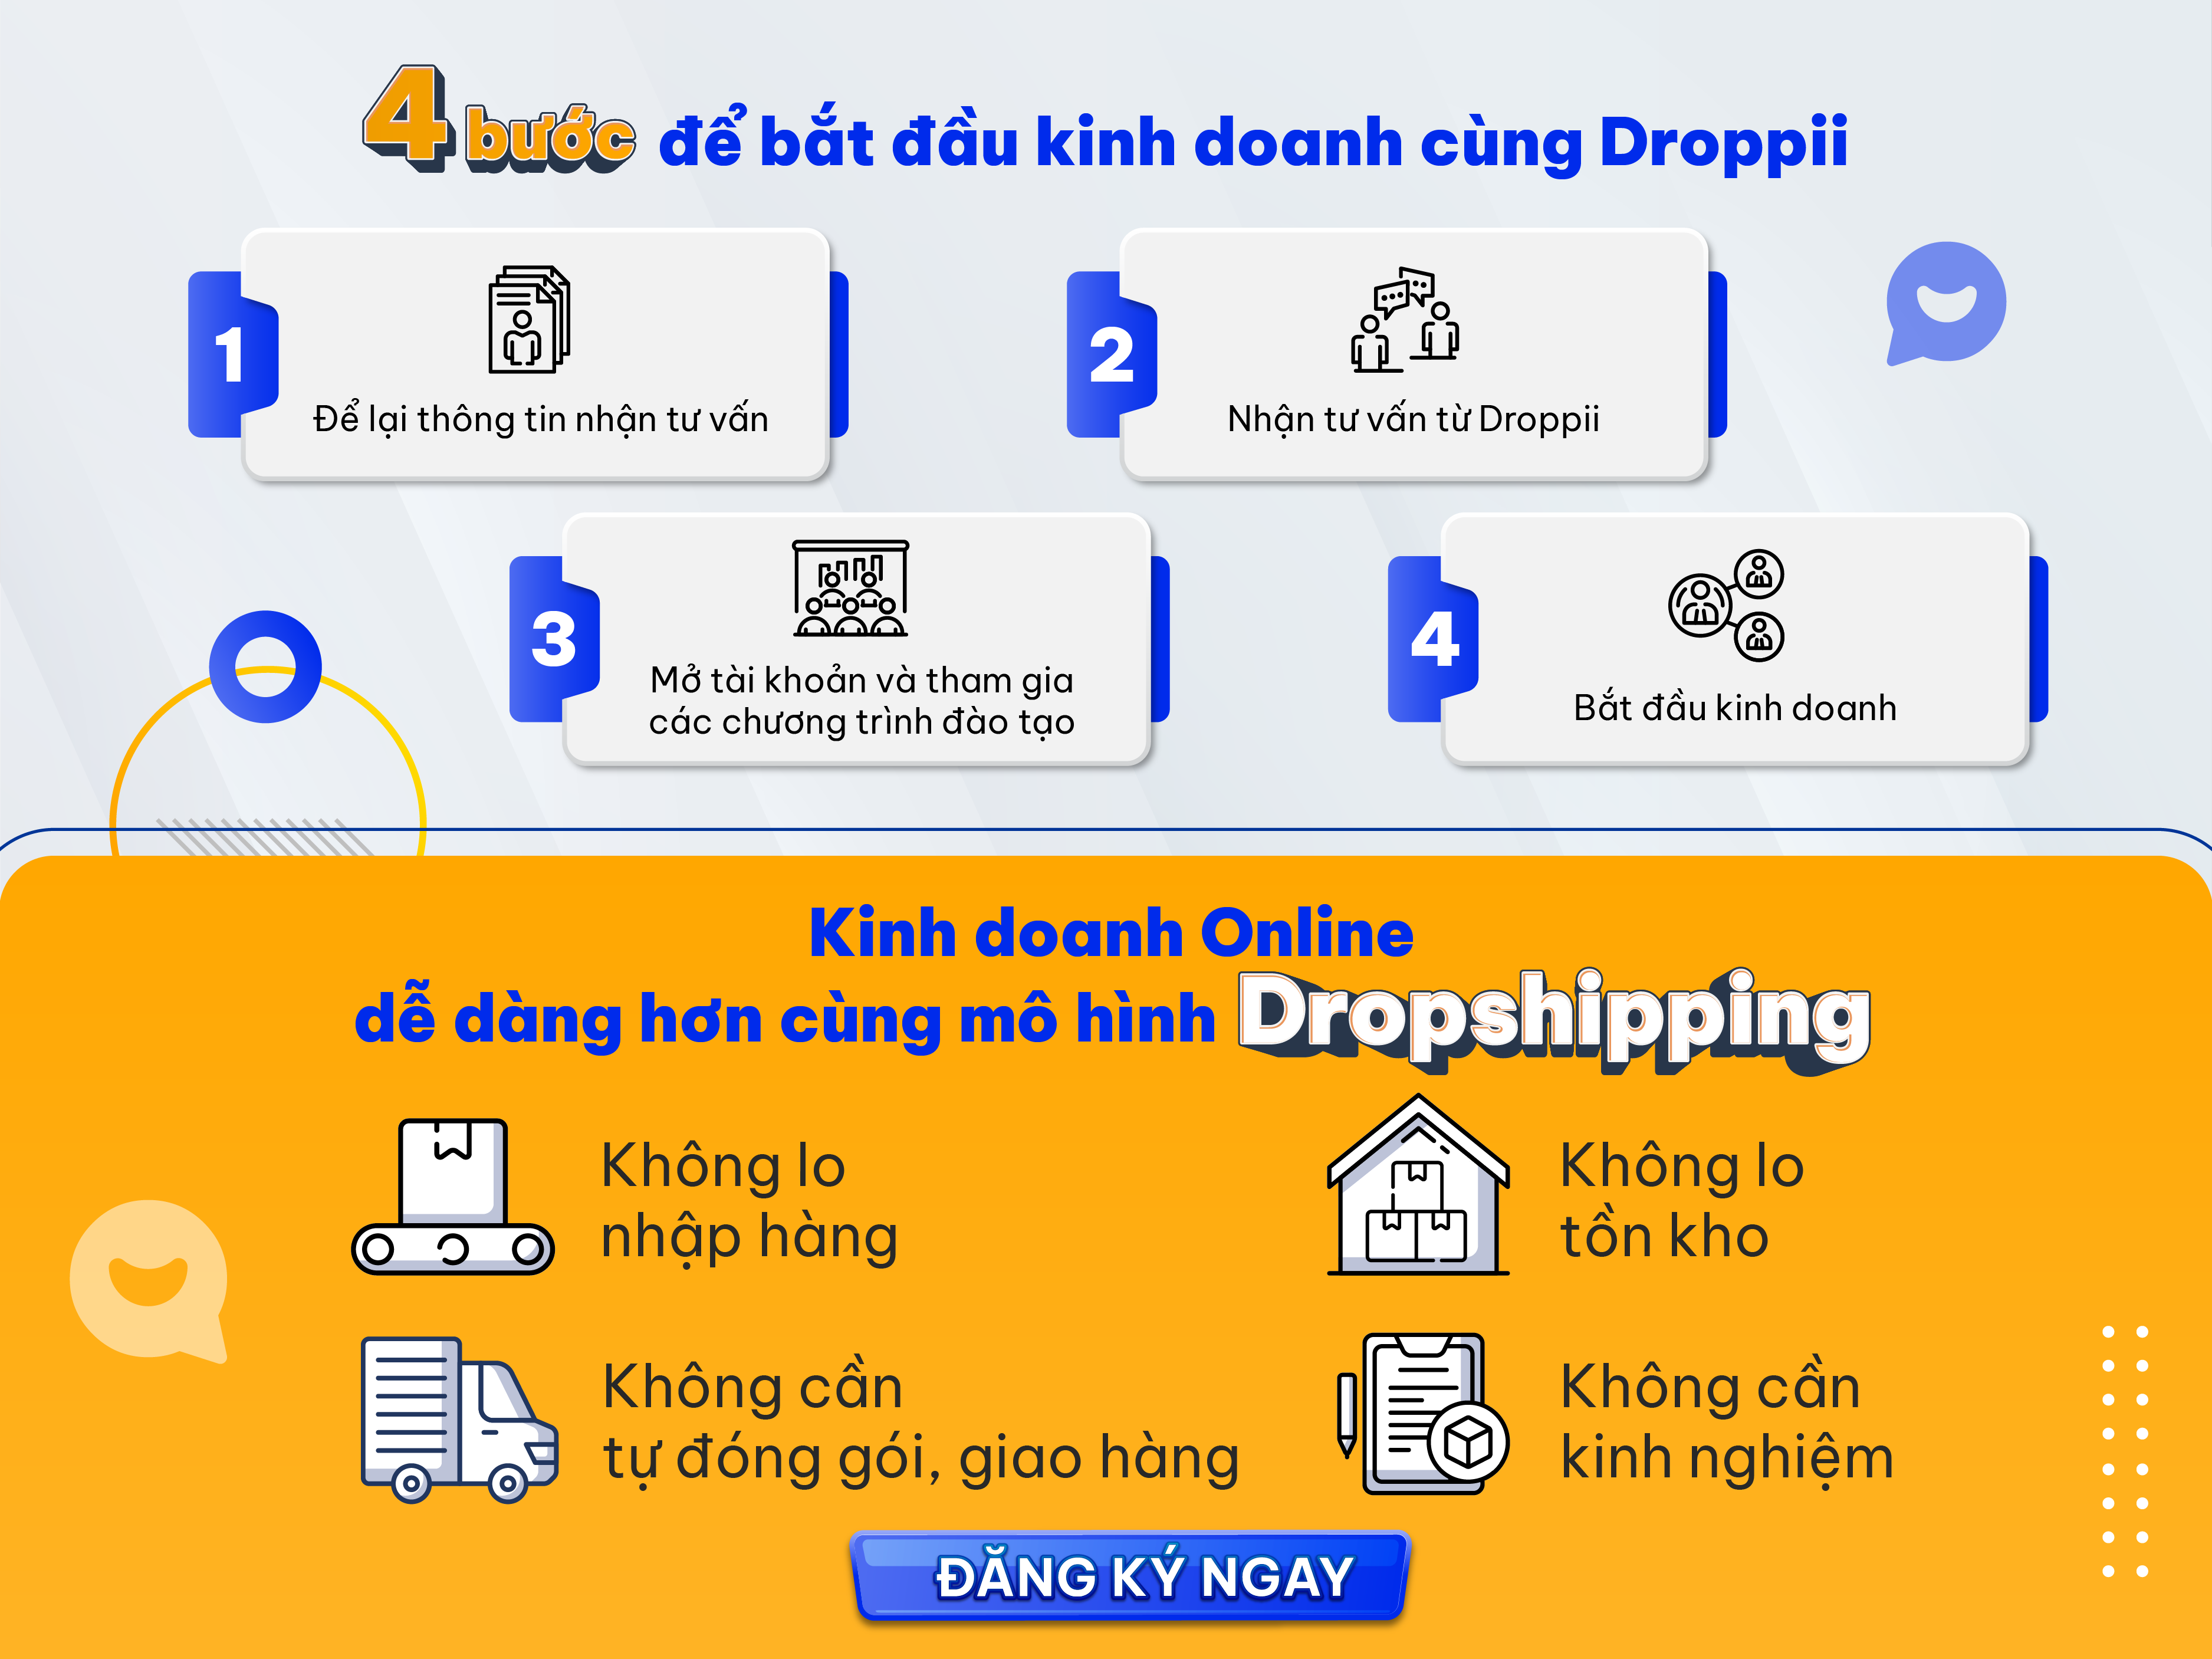 Quy trinh dang ky khoi nghiep kinh doanh online tai nha cung Droppii - Droppii